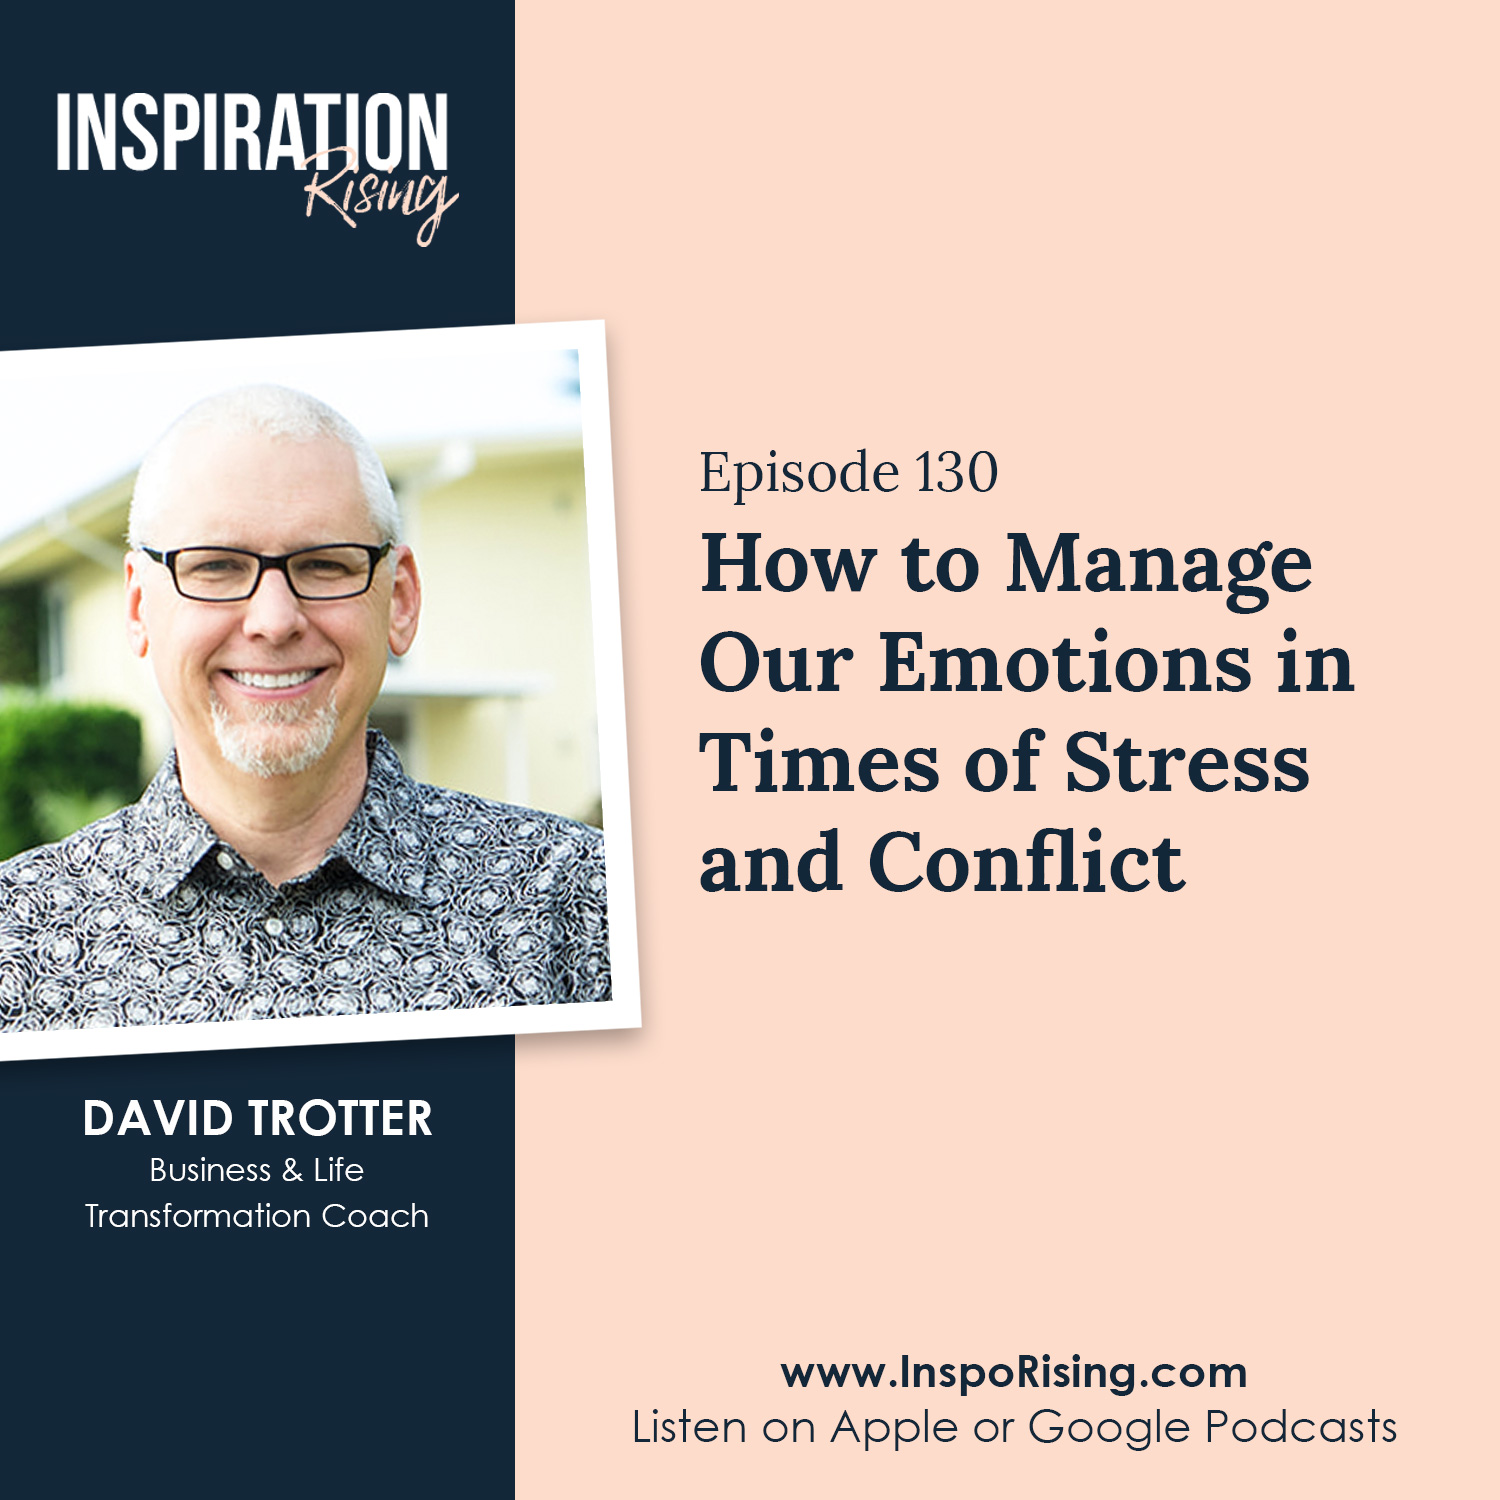 David Trotter - Business Transformation Coach